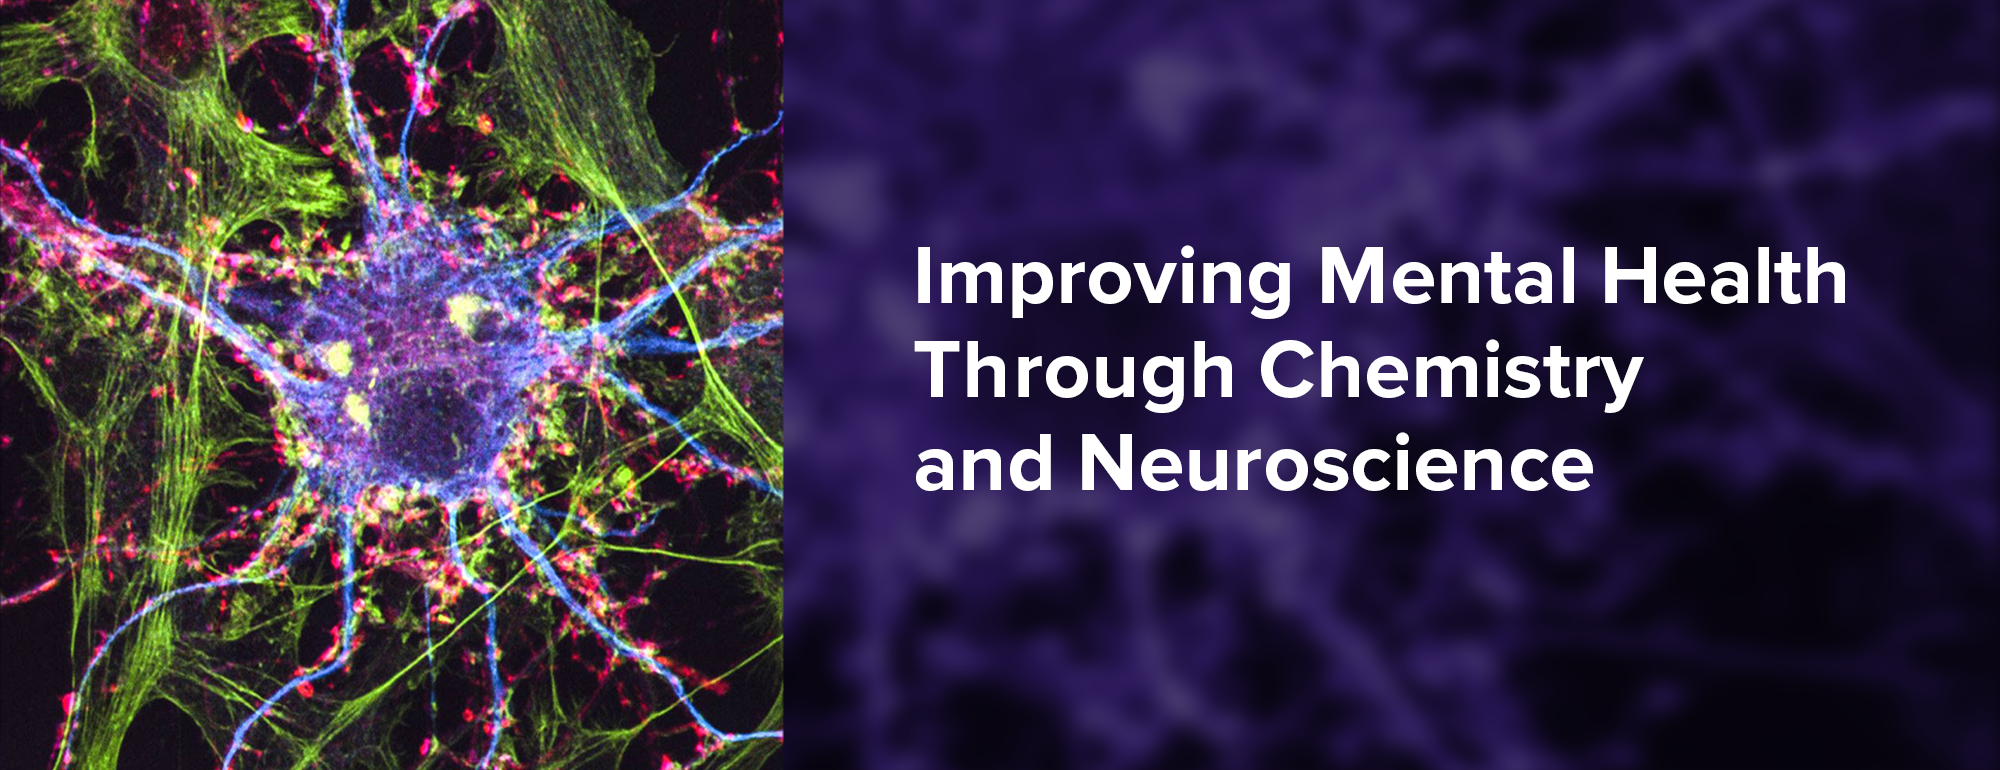 IPN: Improving Mental Health Through Chemistry and Neuroscience